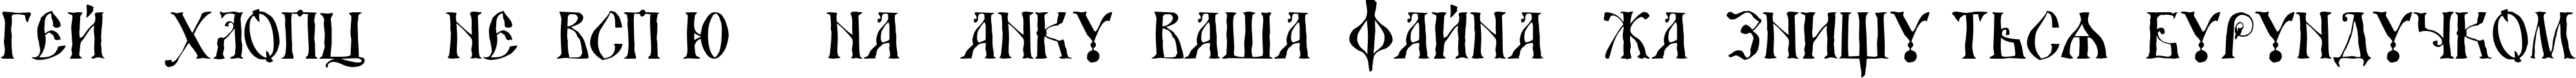 Пример написания шрифтом DS UstavHand текста на украинском